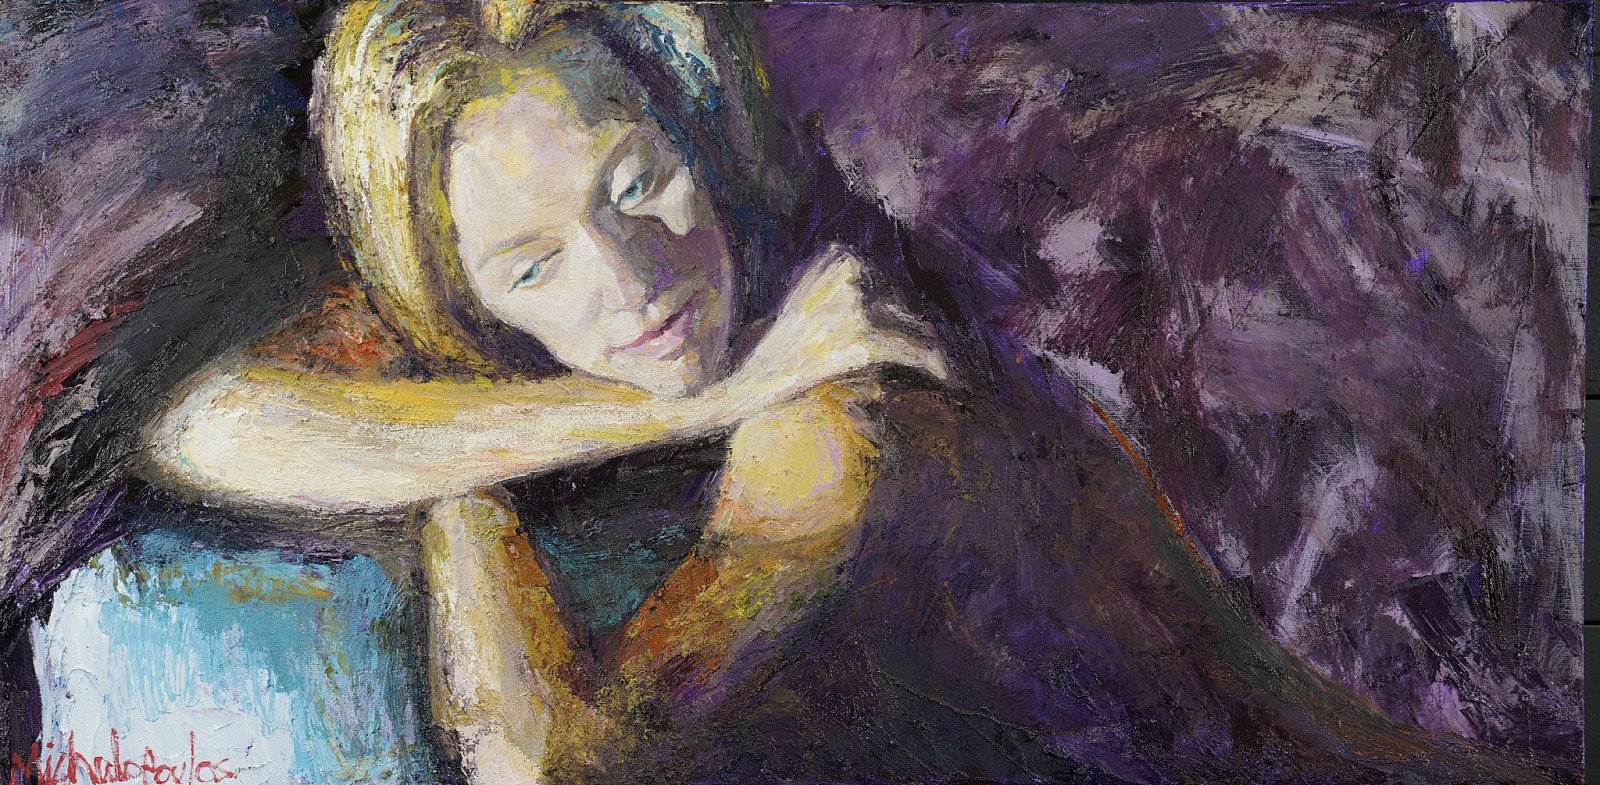 James Michalopoulos, Amanda on the Veranda
Oil on Canvas, 24 x 48 in.
$10,000